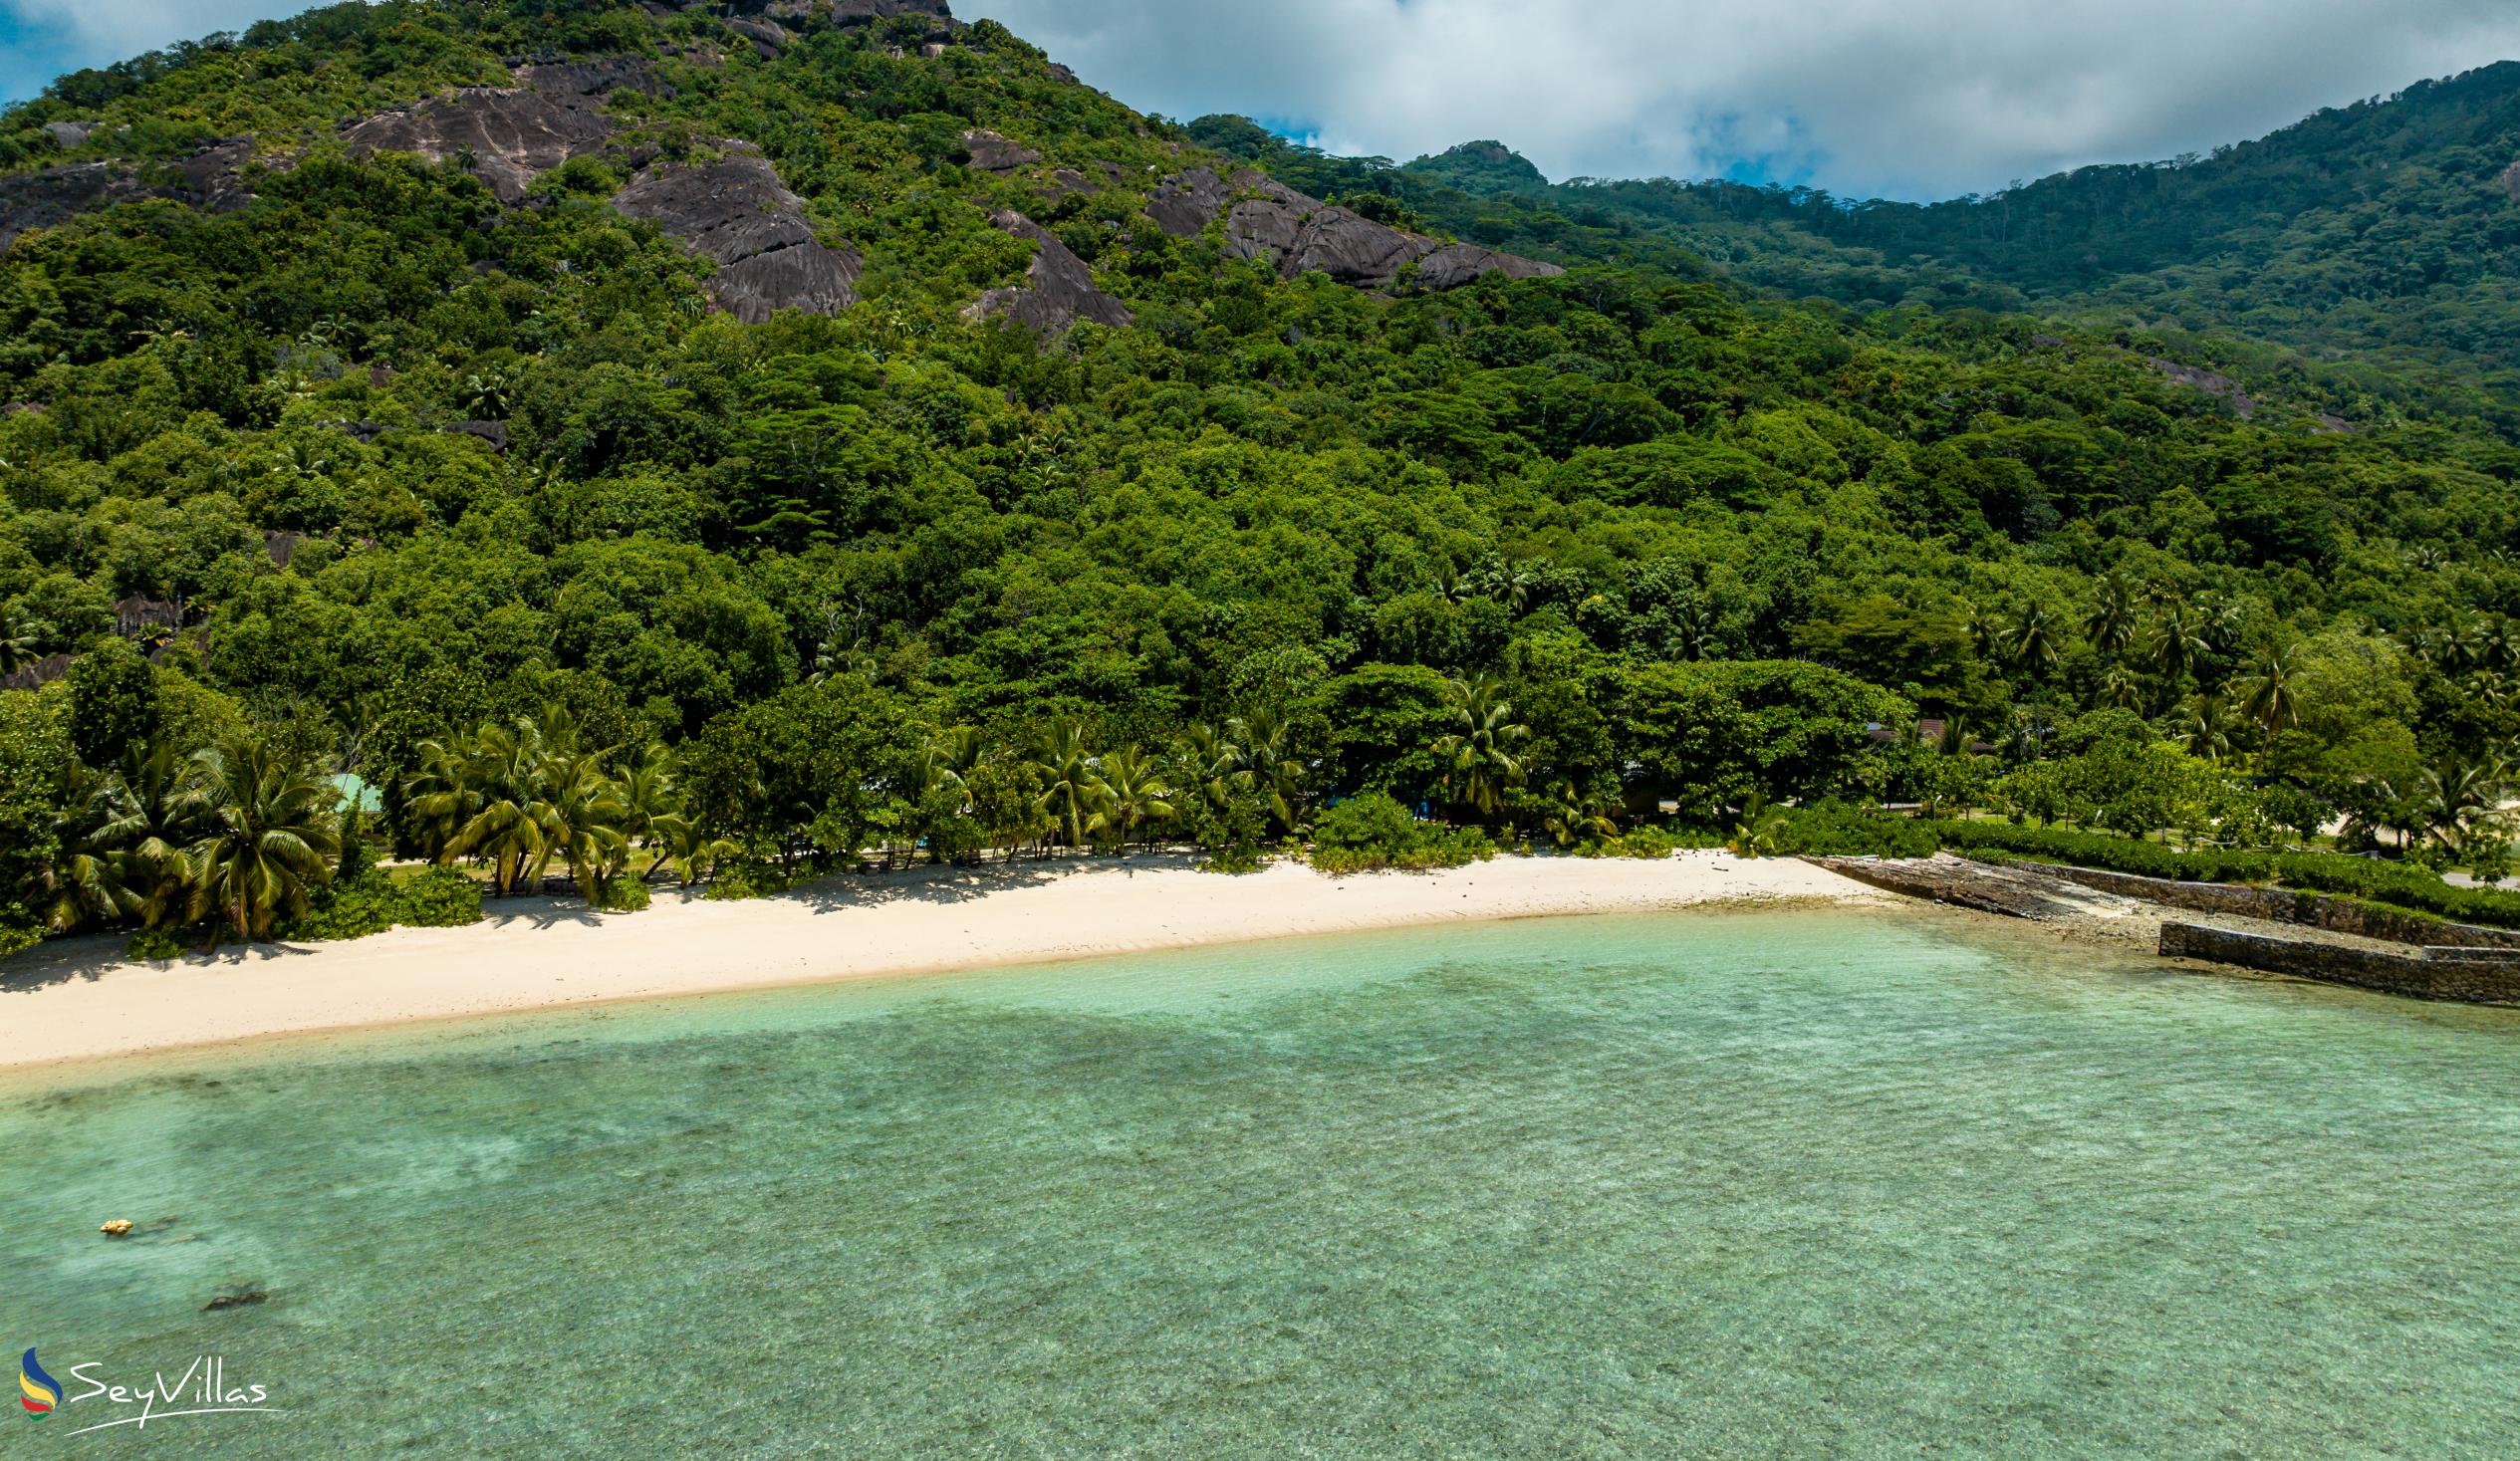 Photo 118: La Belle Tortue - Location - Silhouette Island (Seychelles)